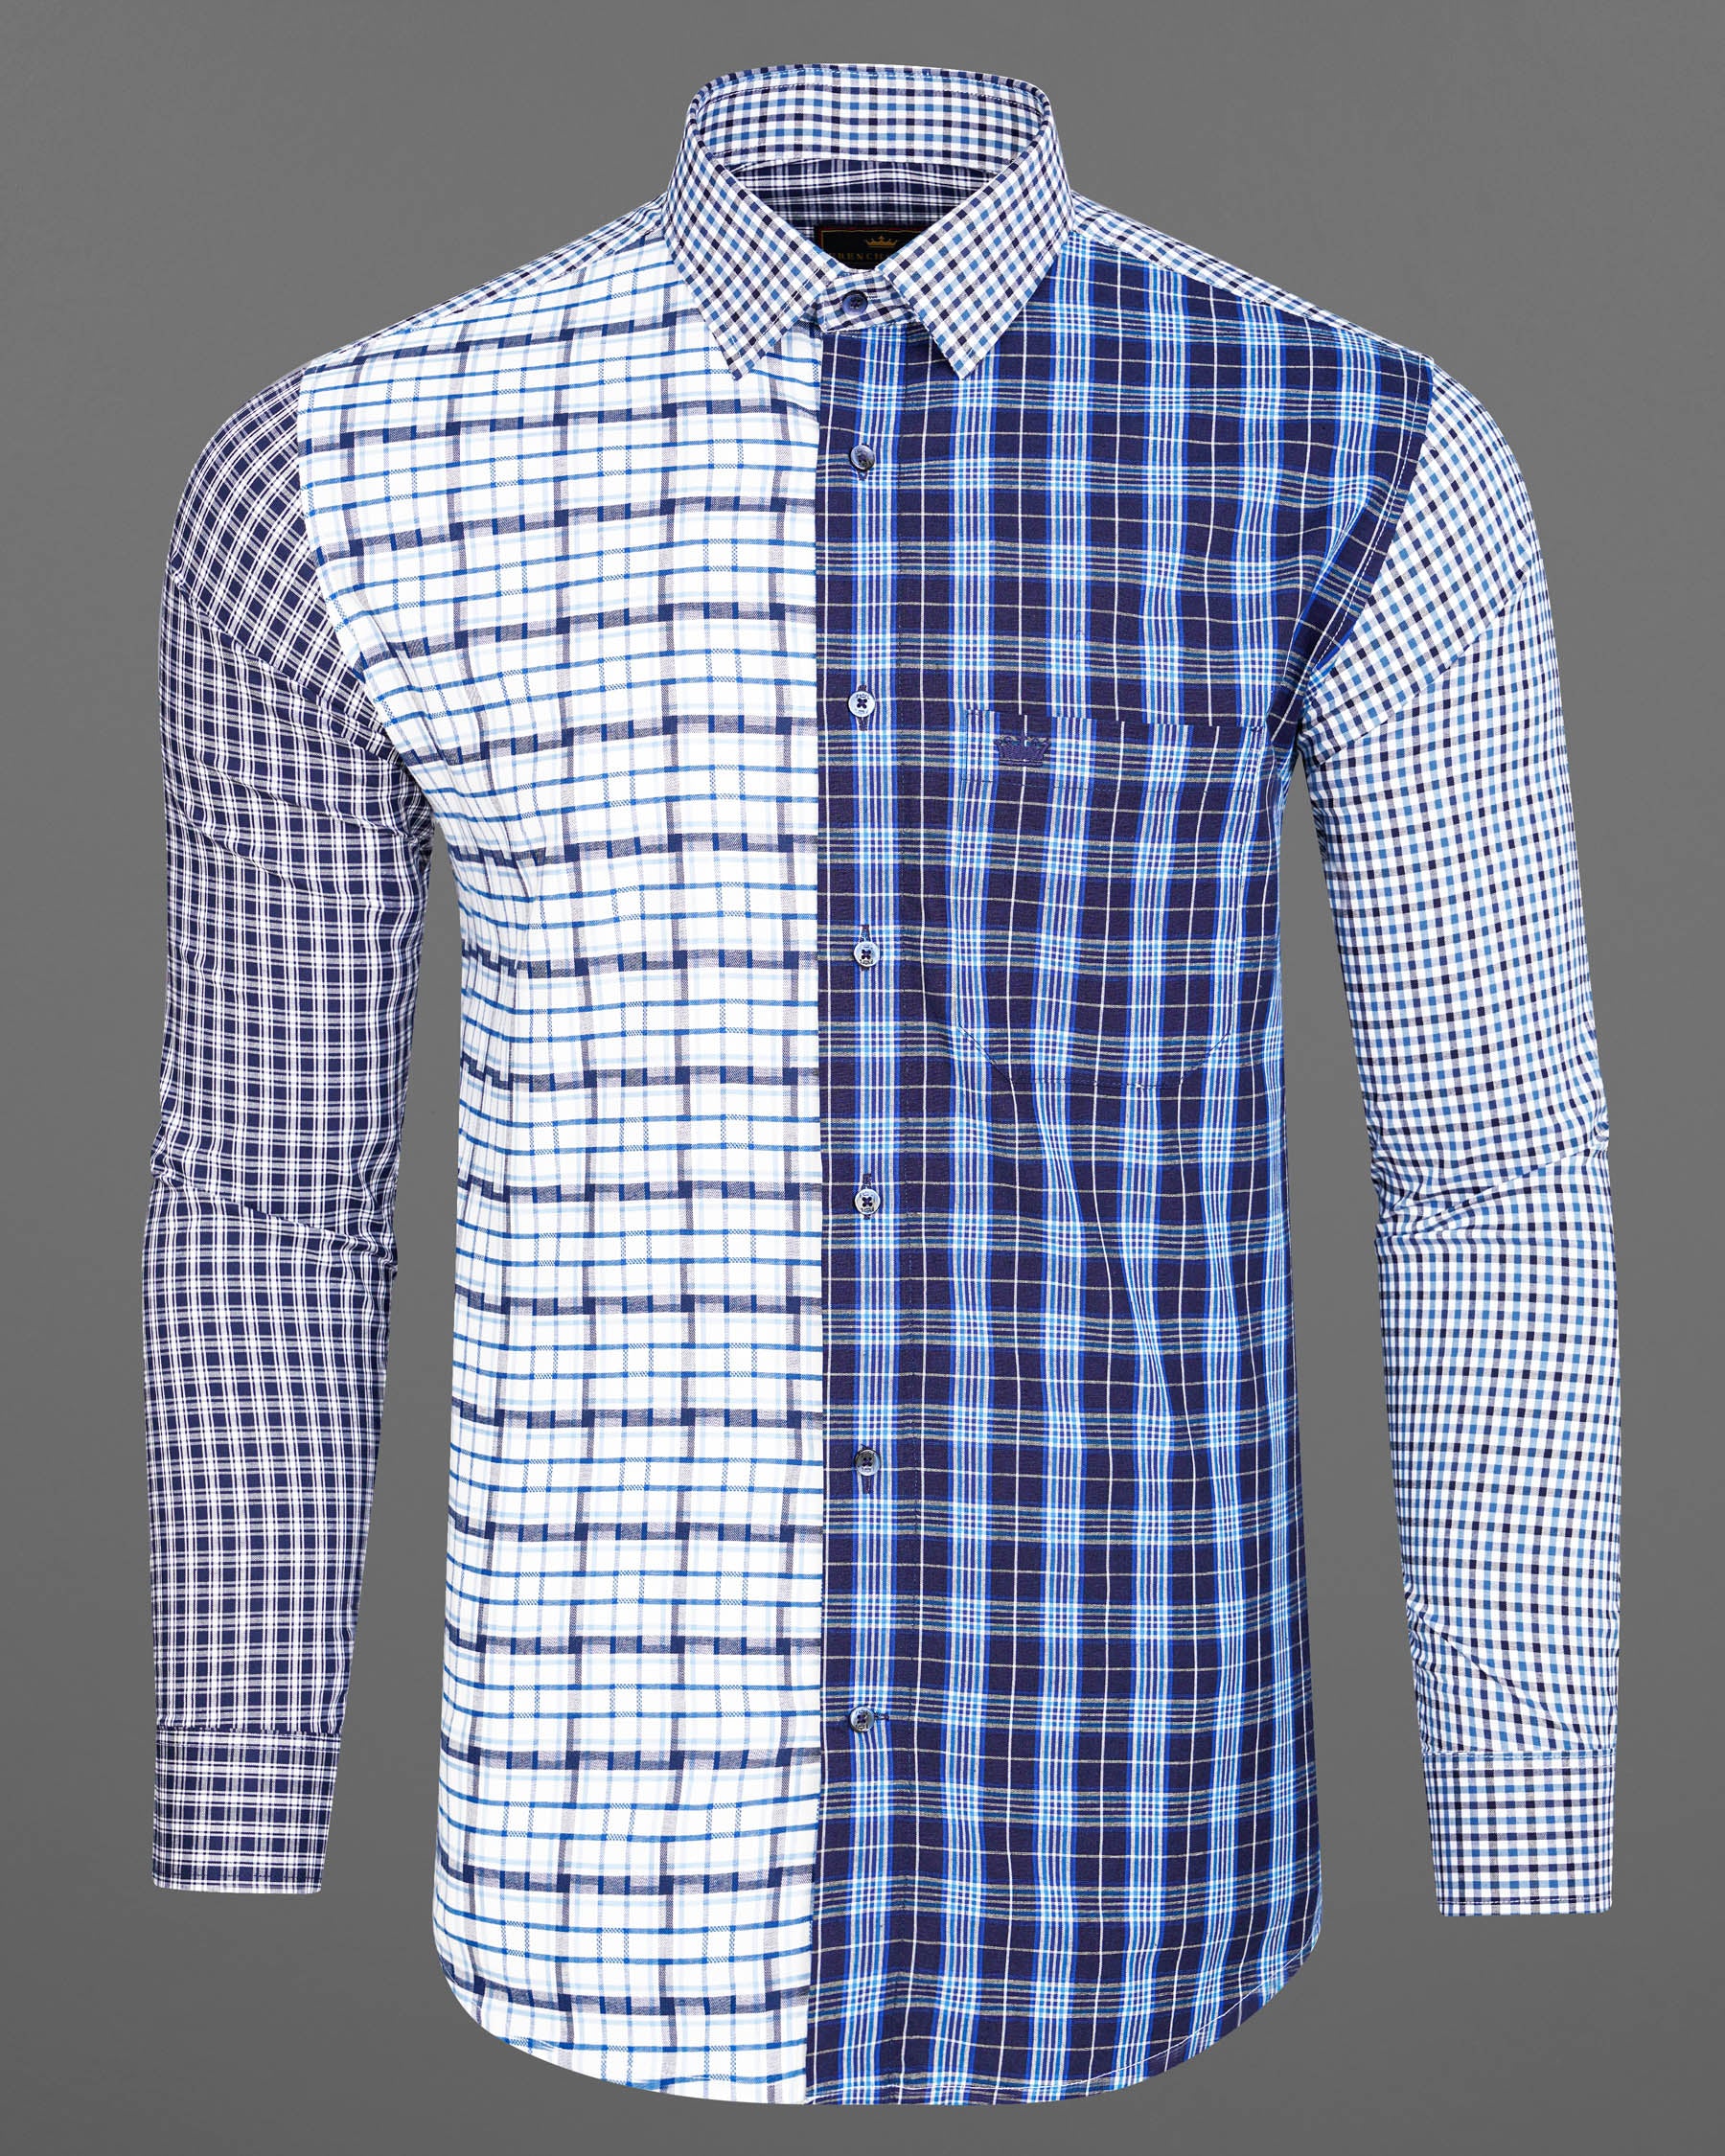 Bright White with Tuna Blue Plaid Premium Cotton Designer Shirt 7825-BLE-P89-38,7825-BLE-P89-38,7825-BLE-P89-39,7825-BLE-P89-39,7825-BLE-P89-40,7825-BLE-P89-40,7825-BLE-P89-42,7825-BLE-P89-42,7825-BLE-P89-44,7825-BLE-P89-44,7825-BLE-P89-46,7825-BLE-P89-46,7825-BLE-P89-48,7825-BLE-P89-48,7825-BLE-P89-50,7825-BLE-P89-50,7825-BLE-P89-52,7825-BLE-P89-52